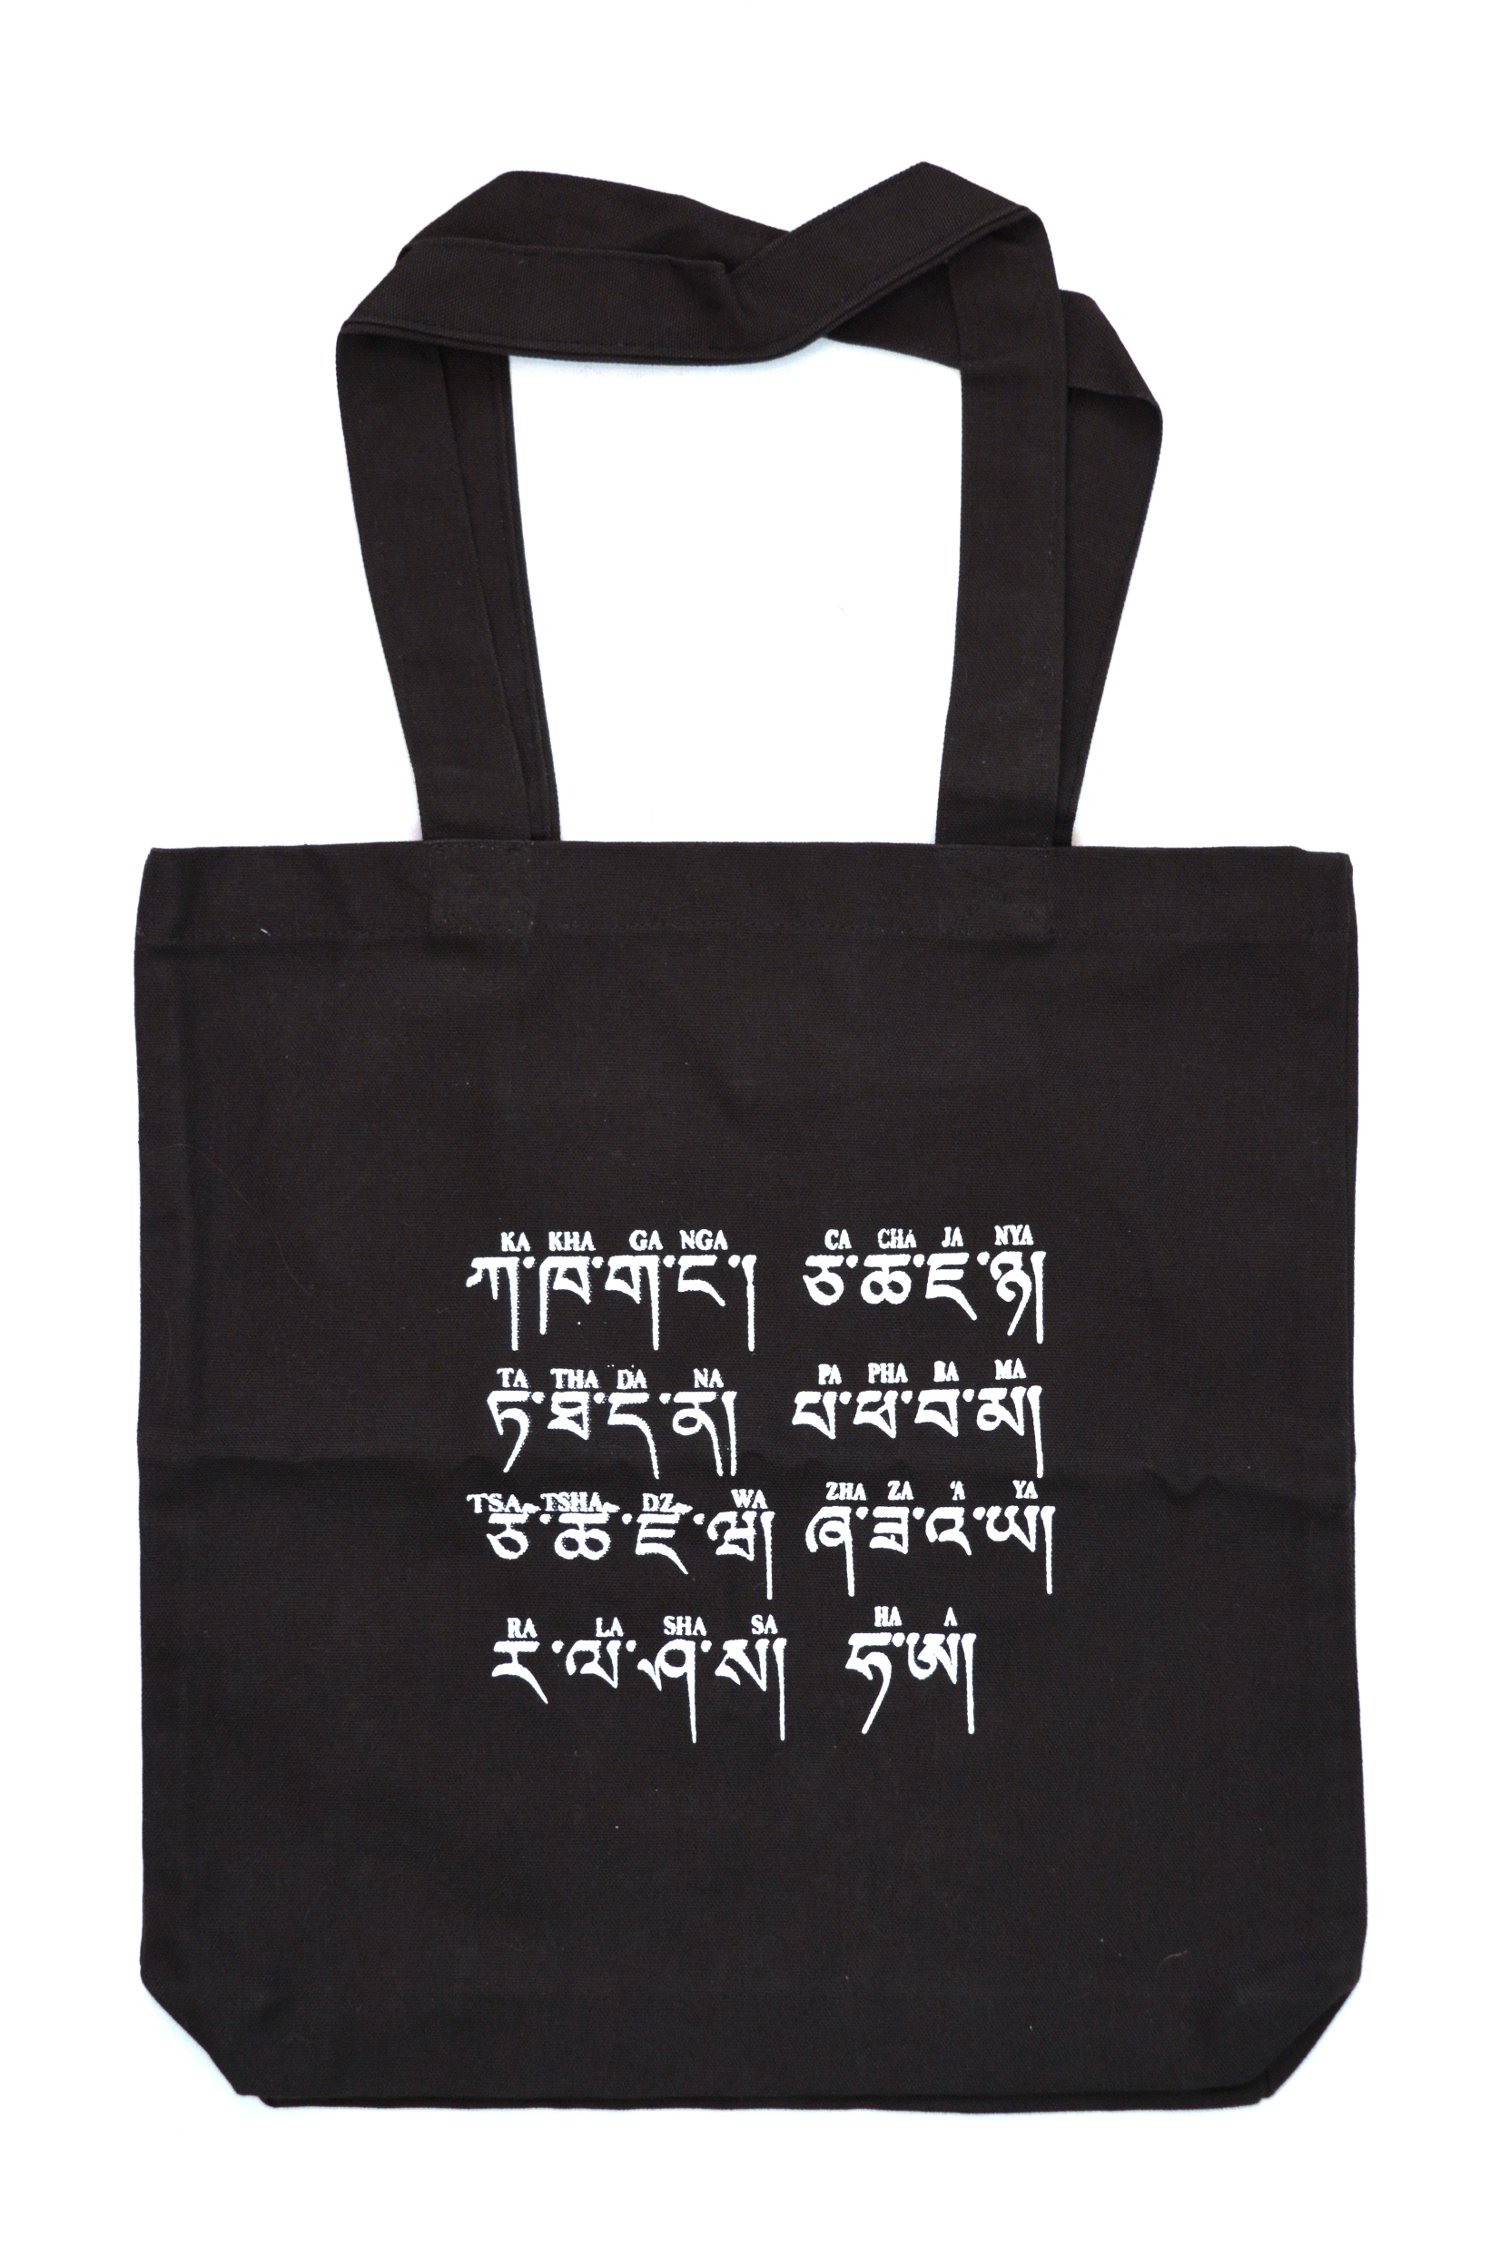 Сумка-шоппер на плечо с тибетским алфавитом, 38 х 38 см. 